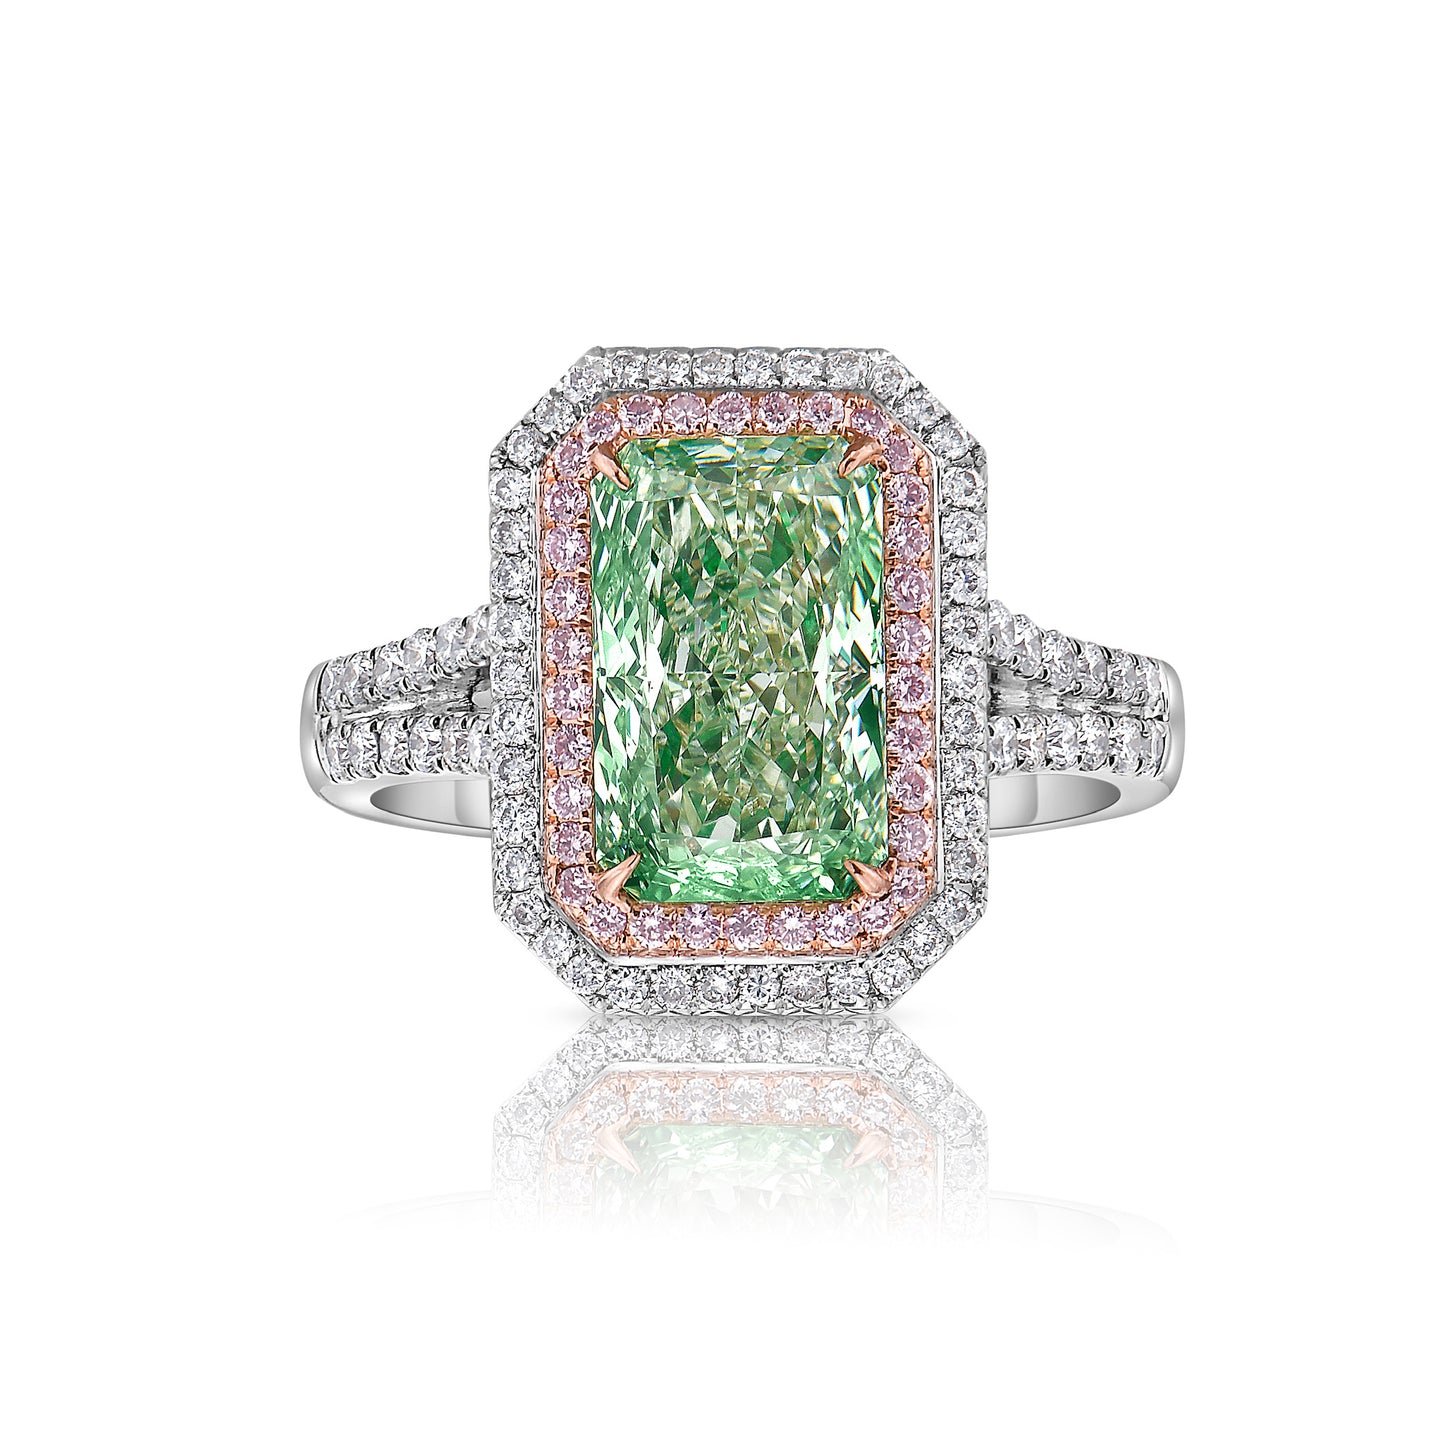 Elongated radiant green diamond ring. JLO green diamond.